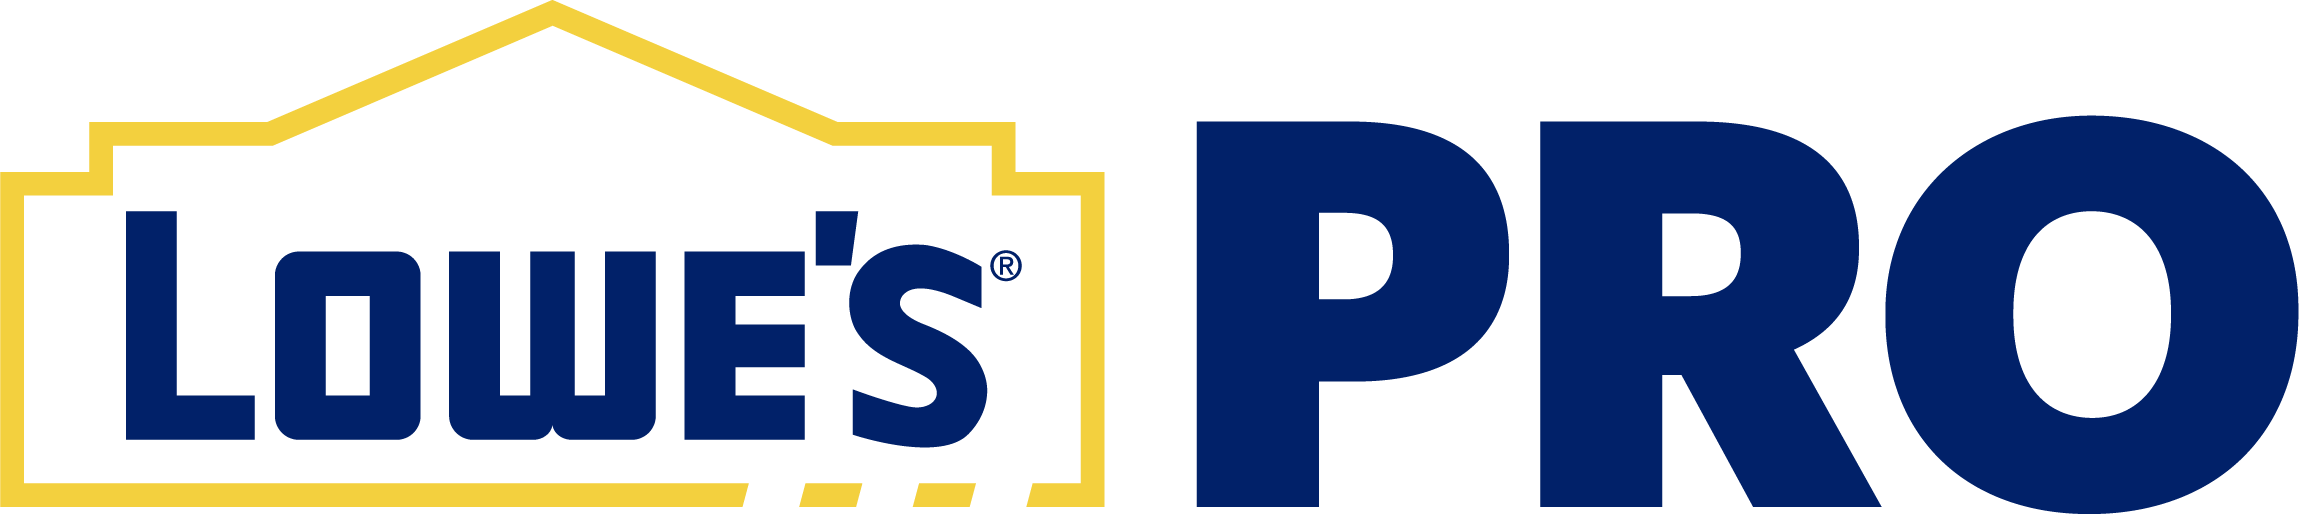 lowes-pro-logo-blue-yellow-rgb